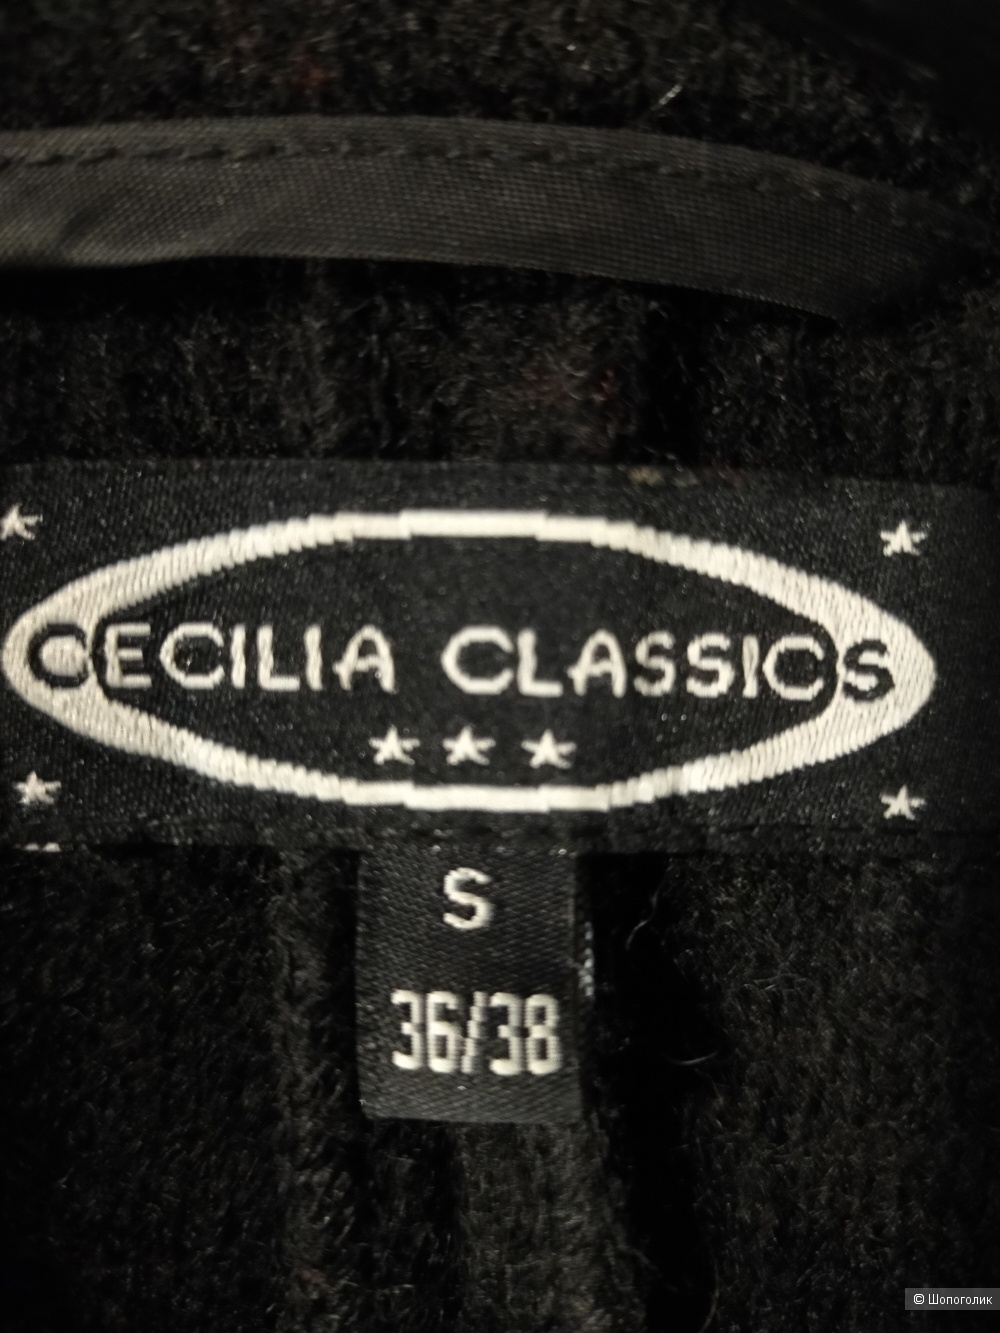 Жакет Cecilia Classics размер 36/38